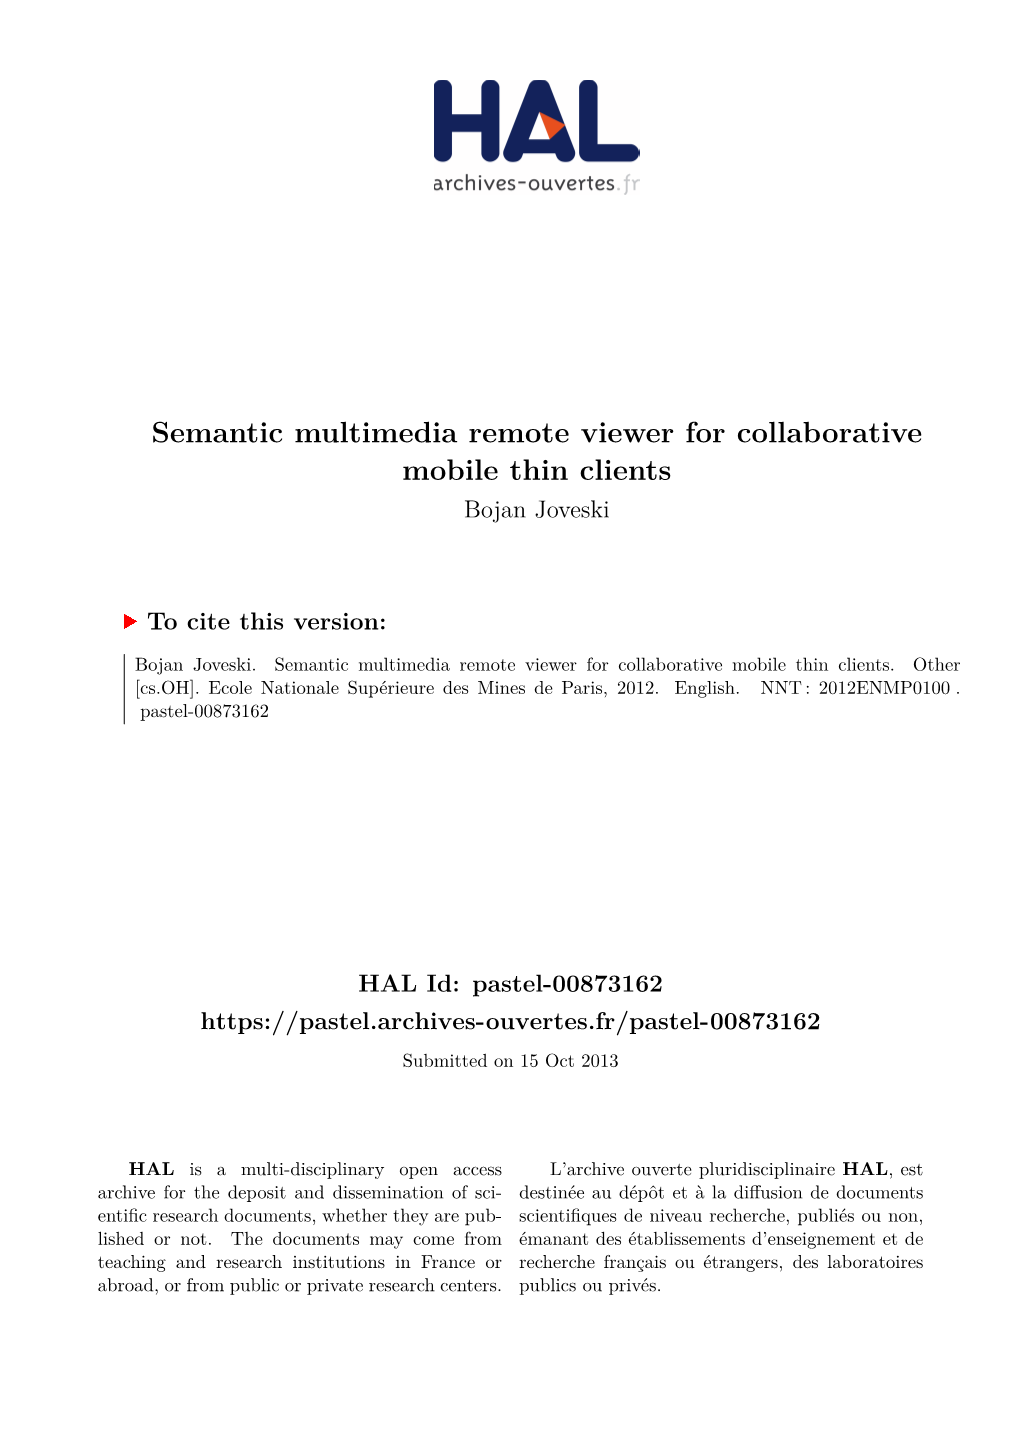 Semantic Multimedia Remote Viewer for Collaborative Mobile Thin Clients Bojan Joveski